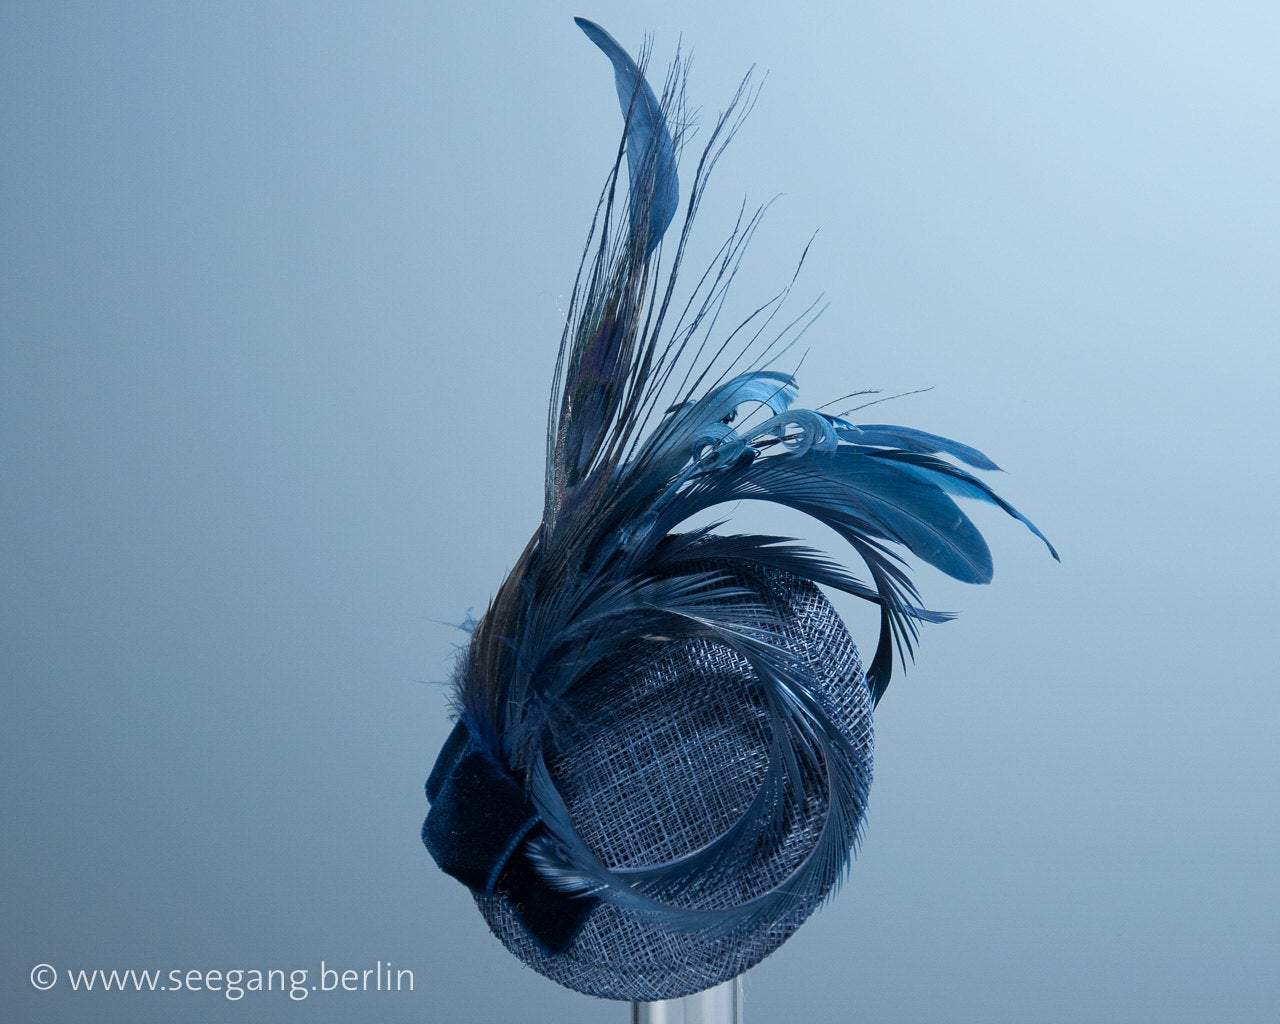 FASCINATOR - GLAMOROUS HEADPIECE IN BEAUTIFUL SHADES OF BLUE © Seegang Berlin